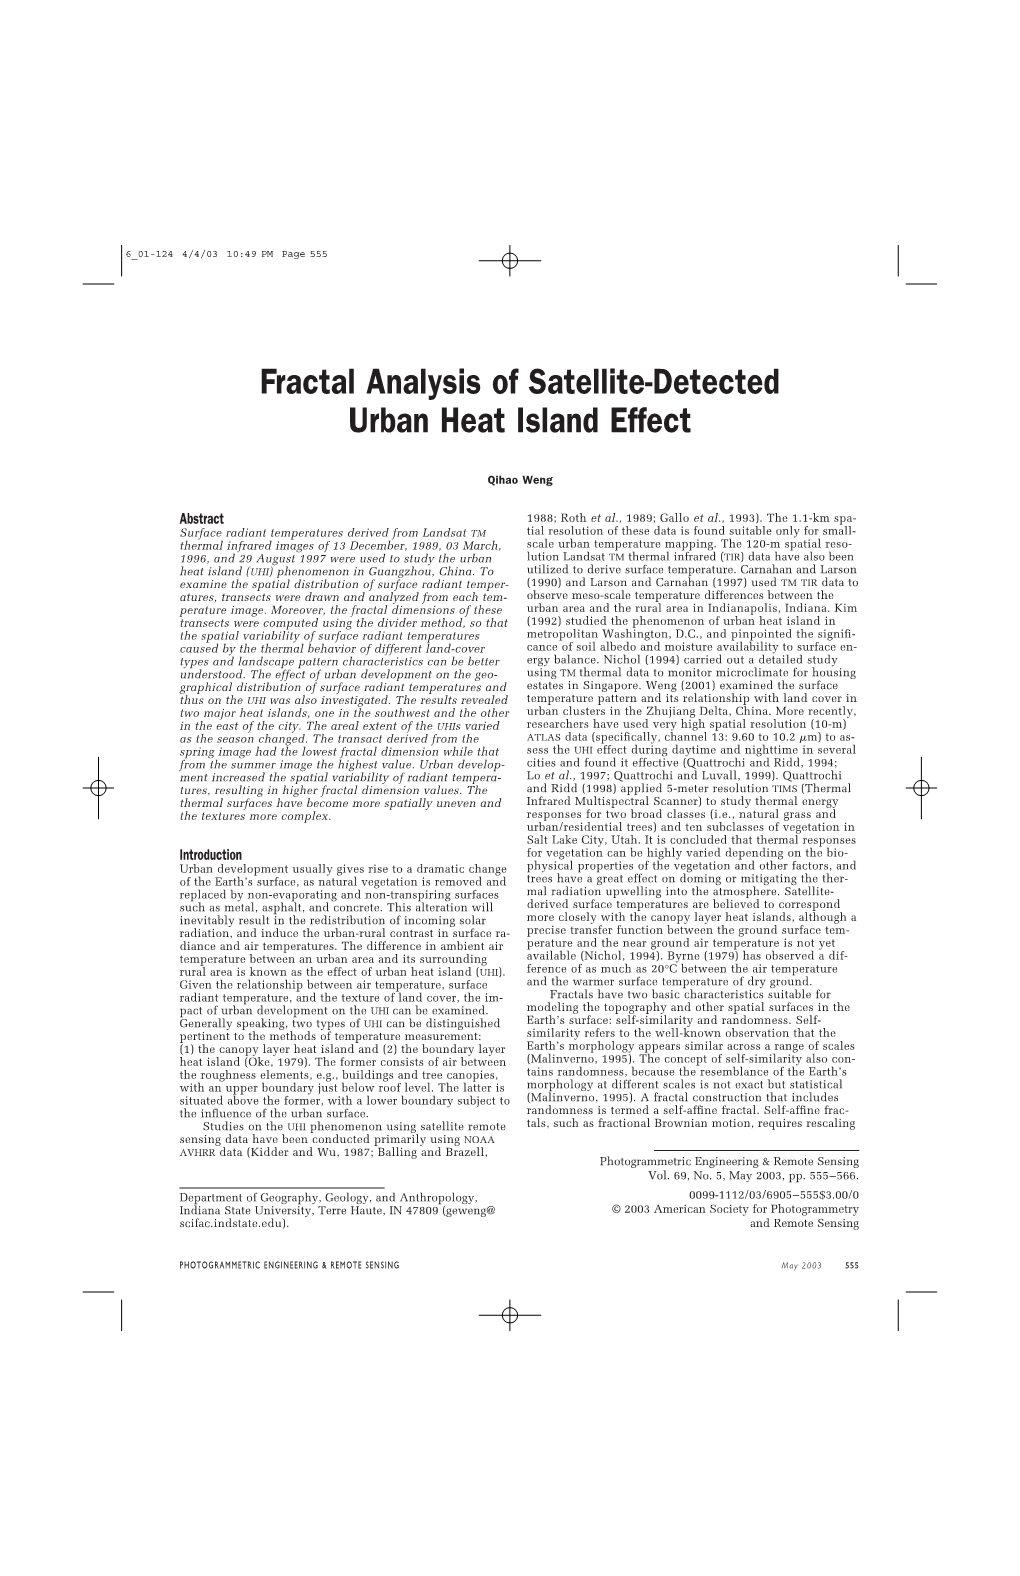 Fractal Analysis of Satellite-Detected Urban Heat Island Effect